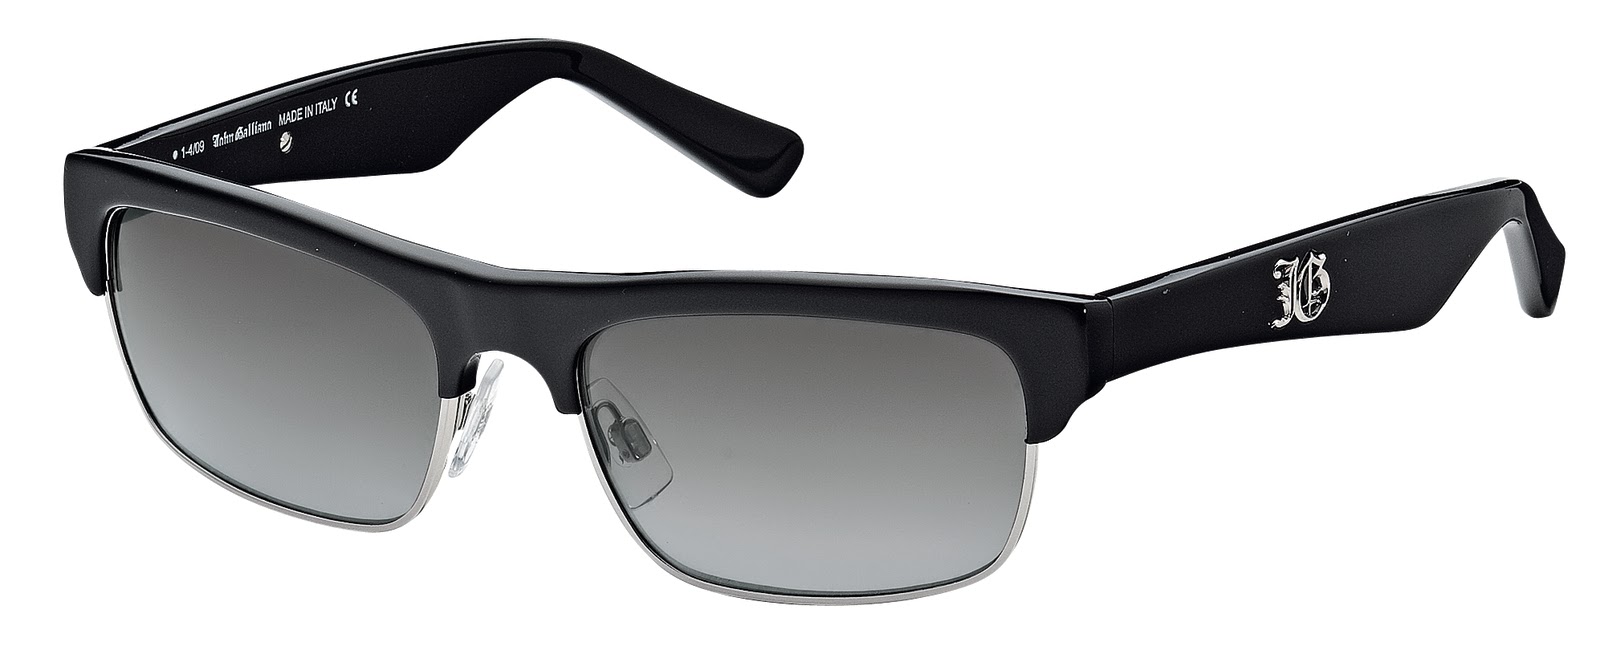 The Eternity Eyewear Blog: The John Galliano Range of Sunglasses.